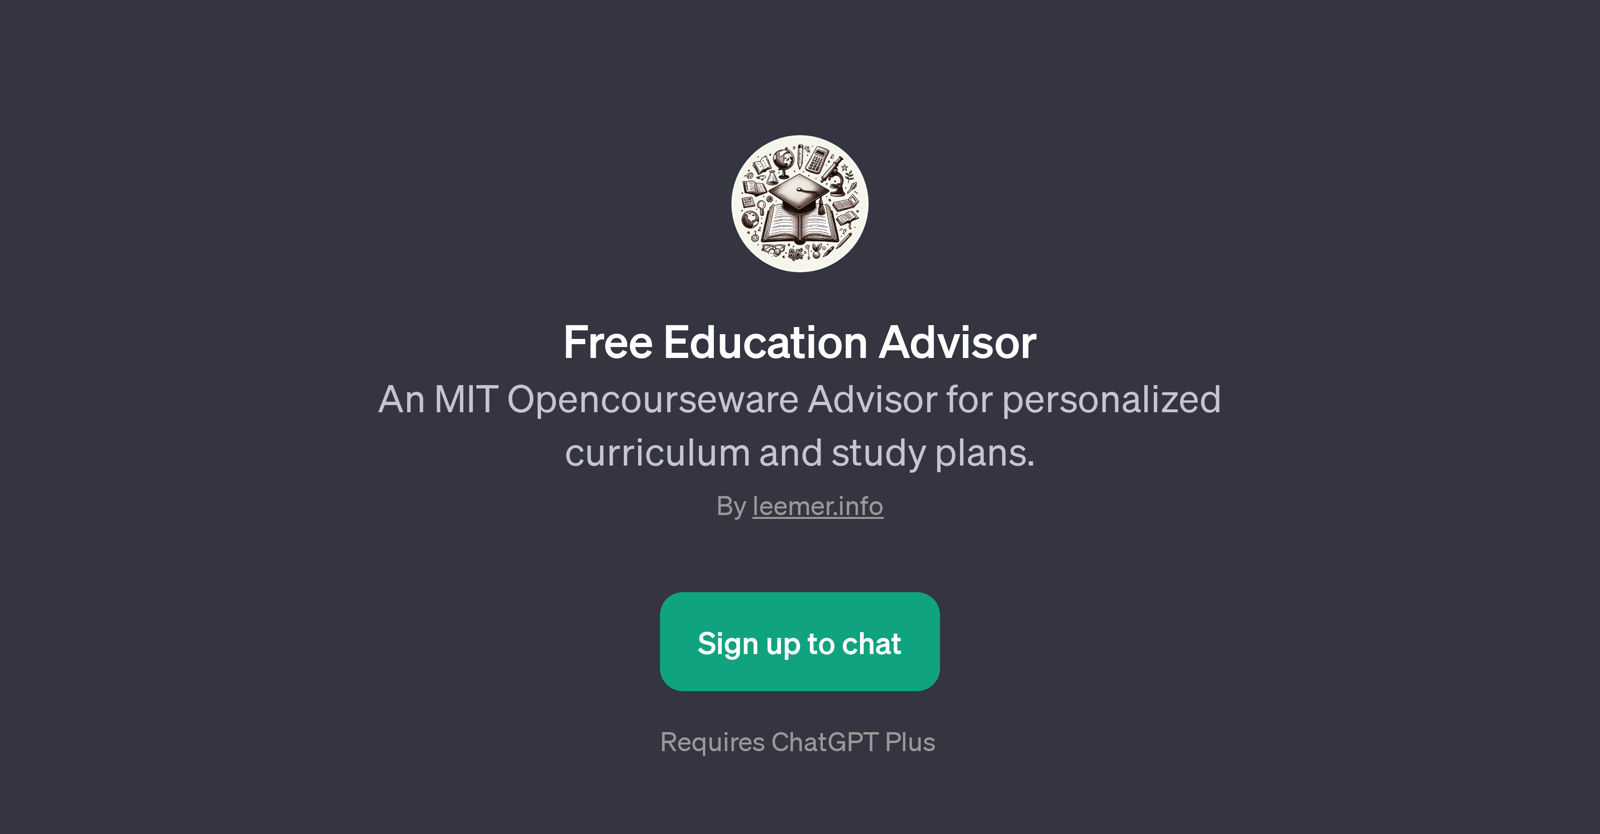 Free Education Advisor website